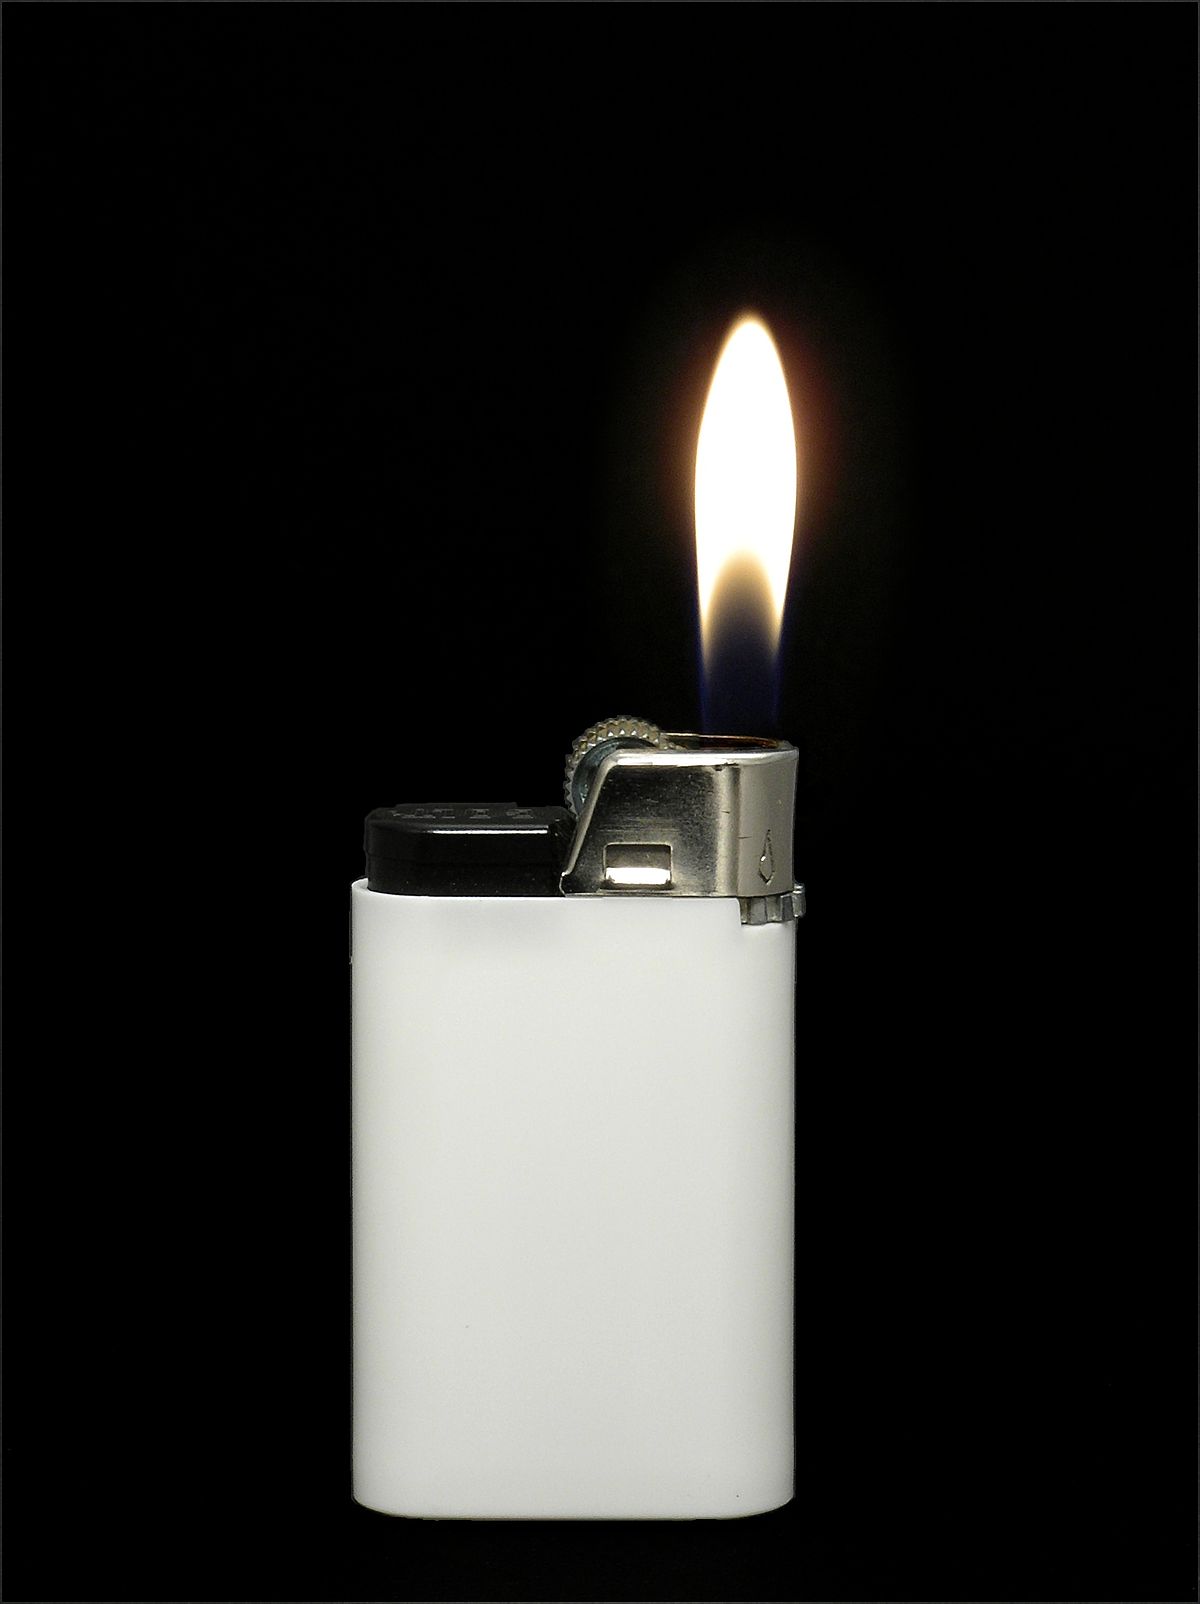 Lighter - Wikipedia